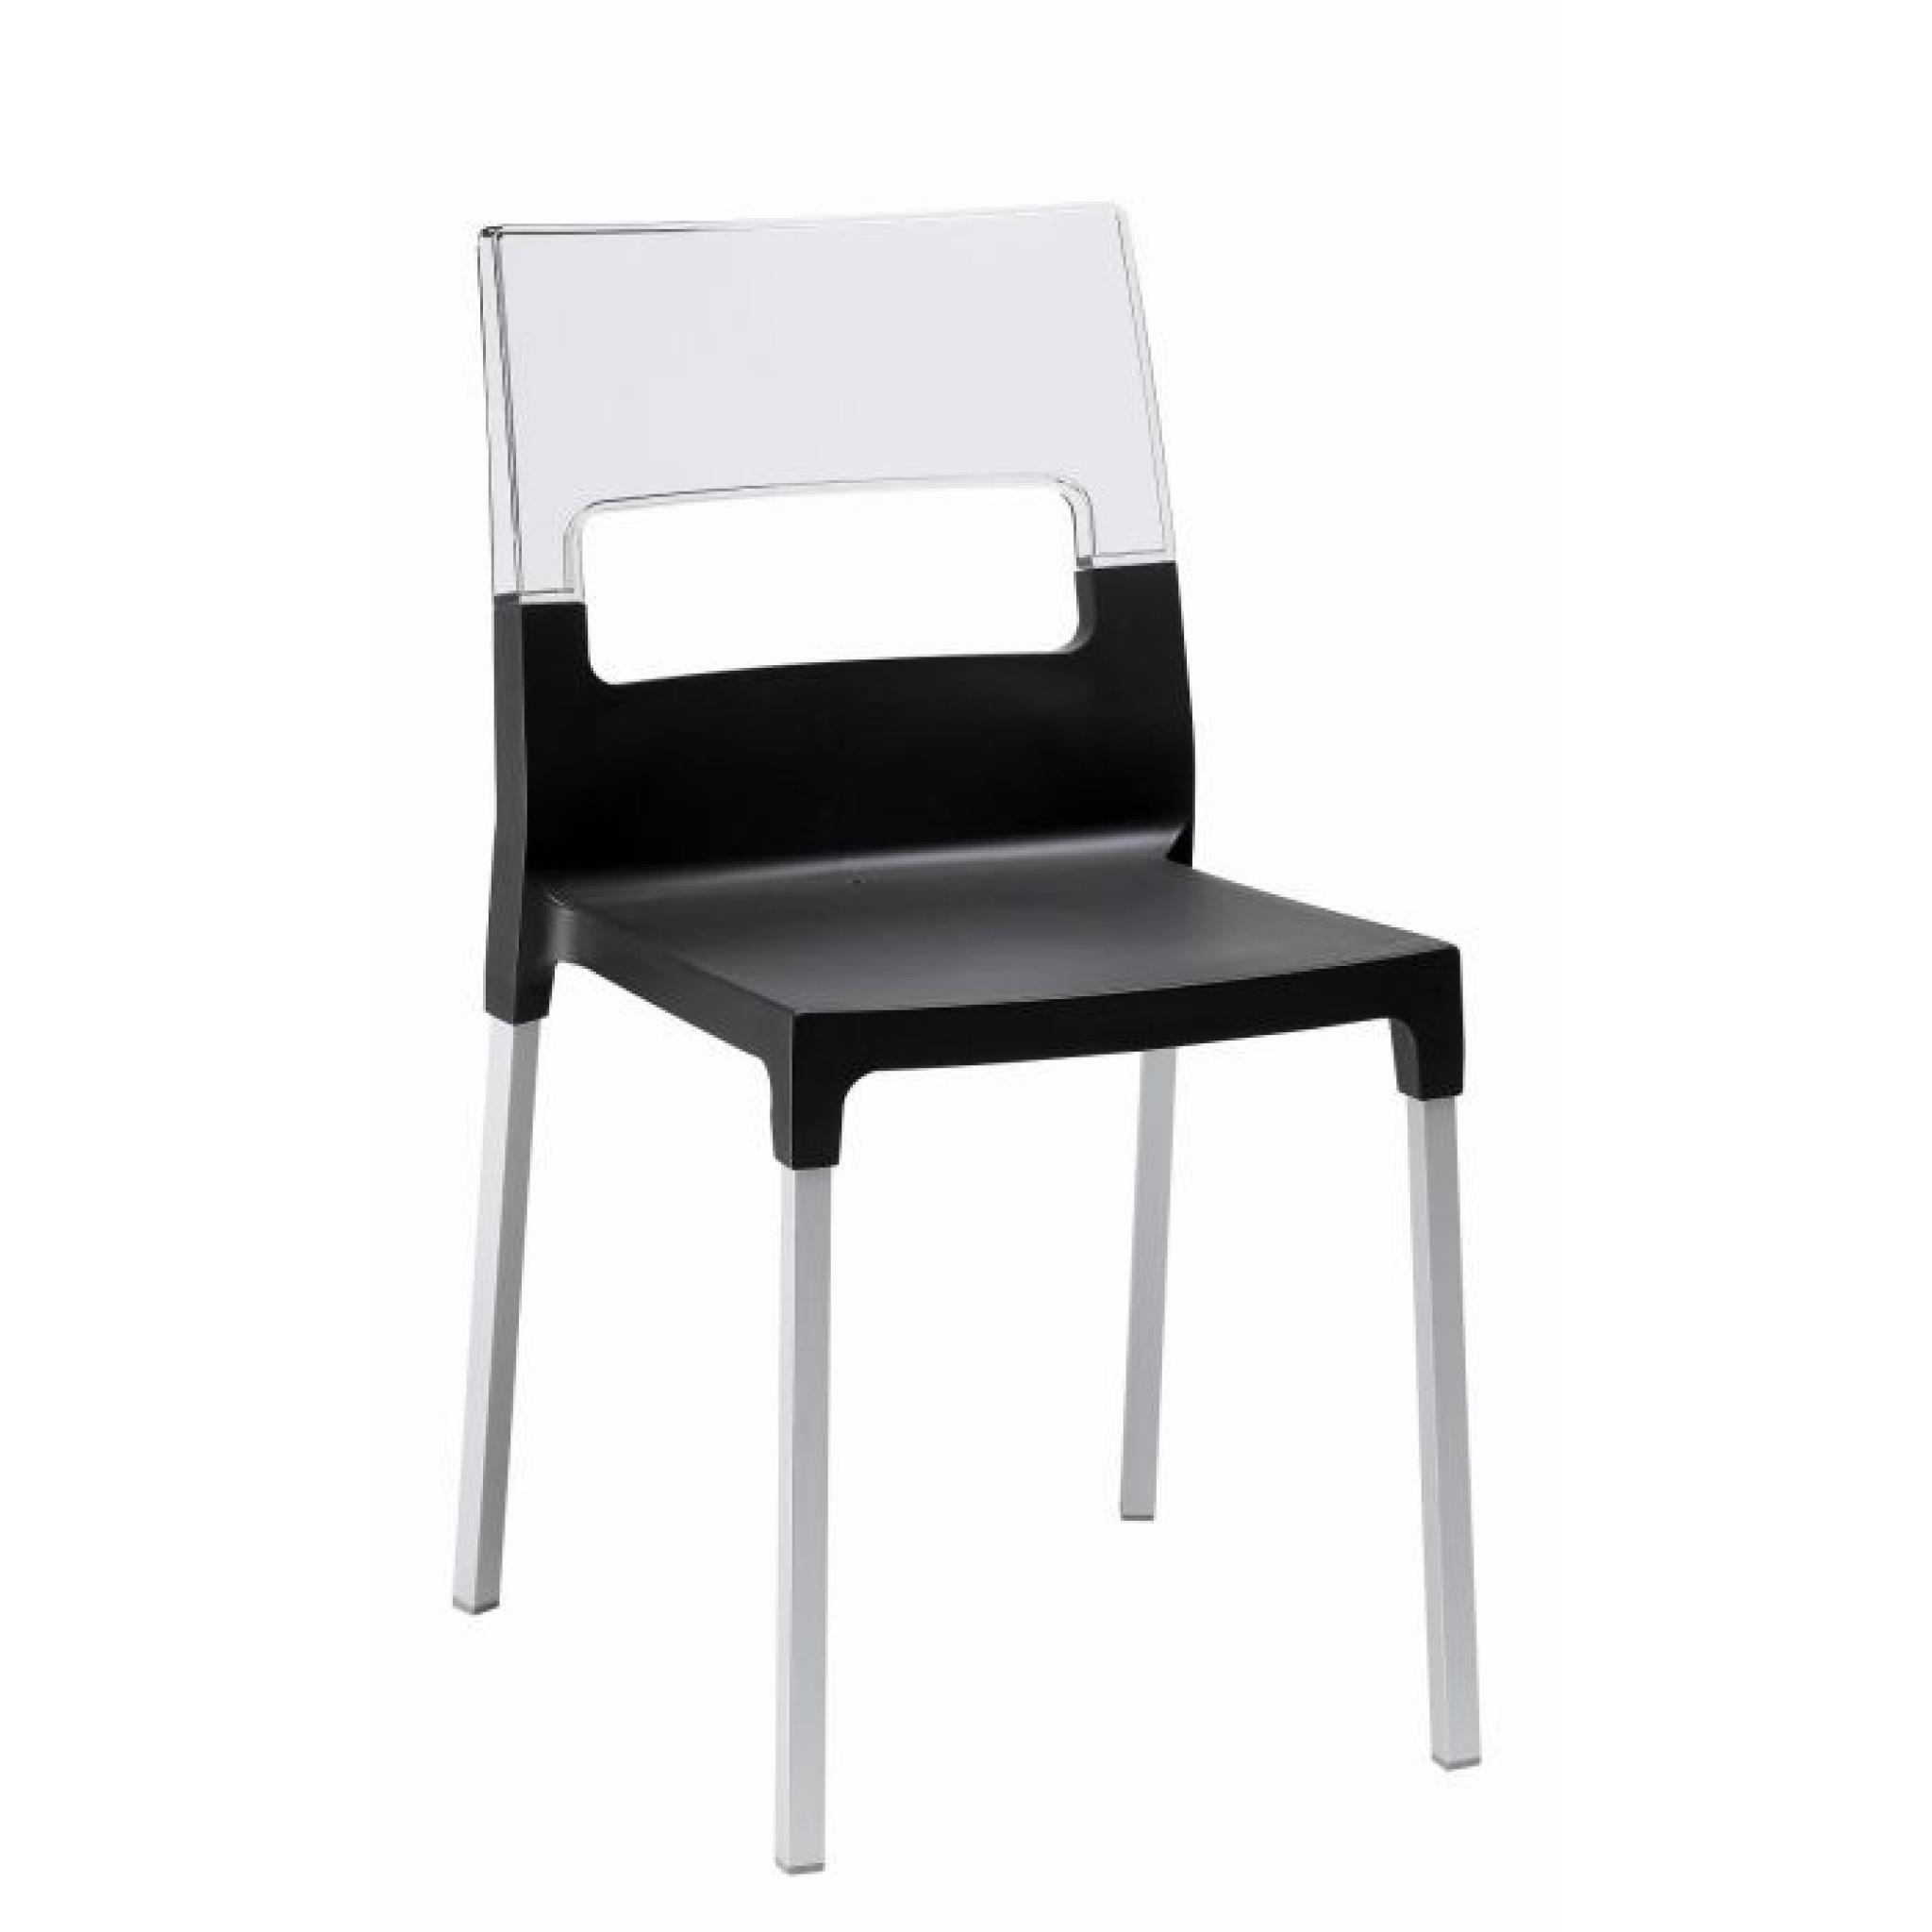 Chaise grise anthracite et transparente design …